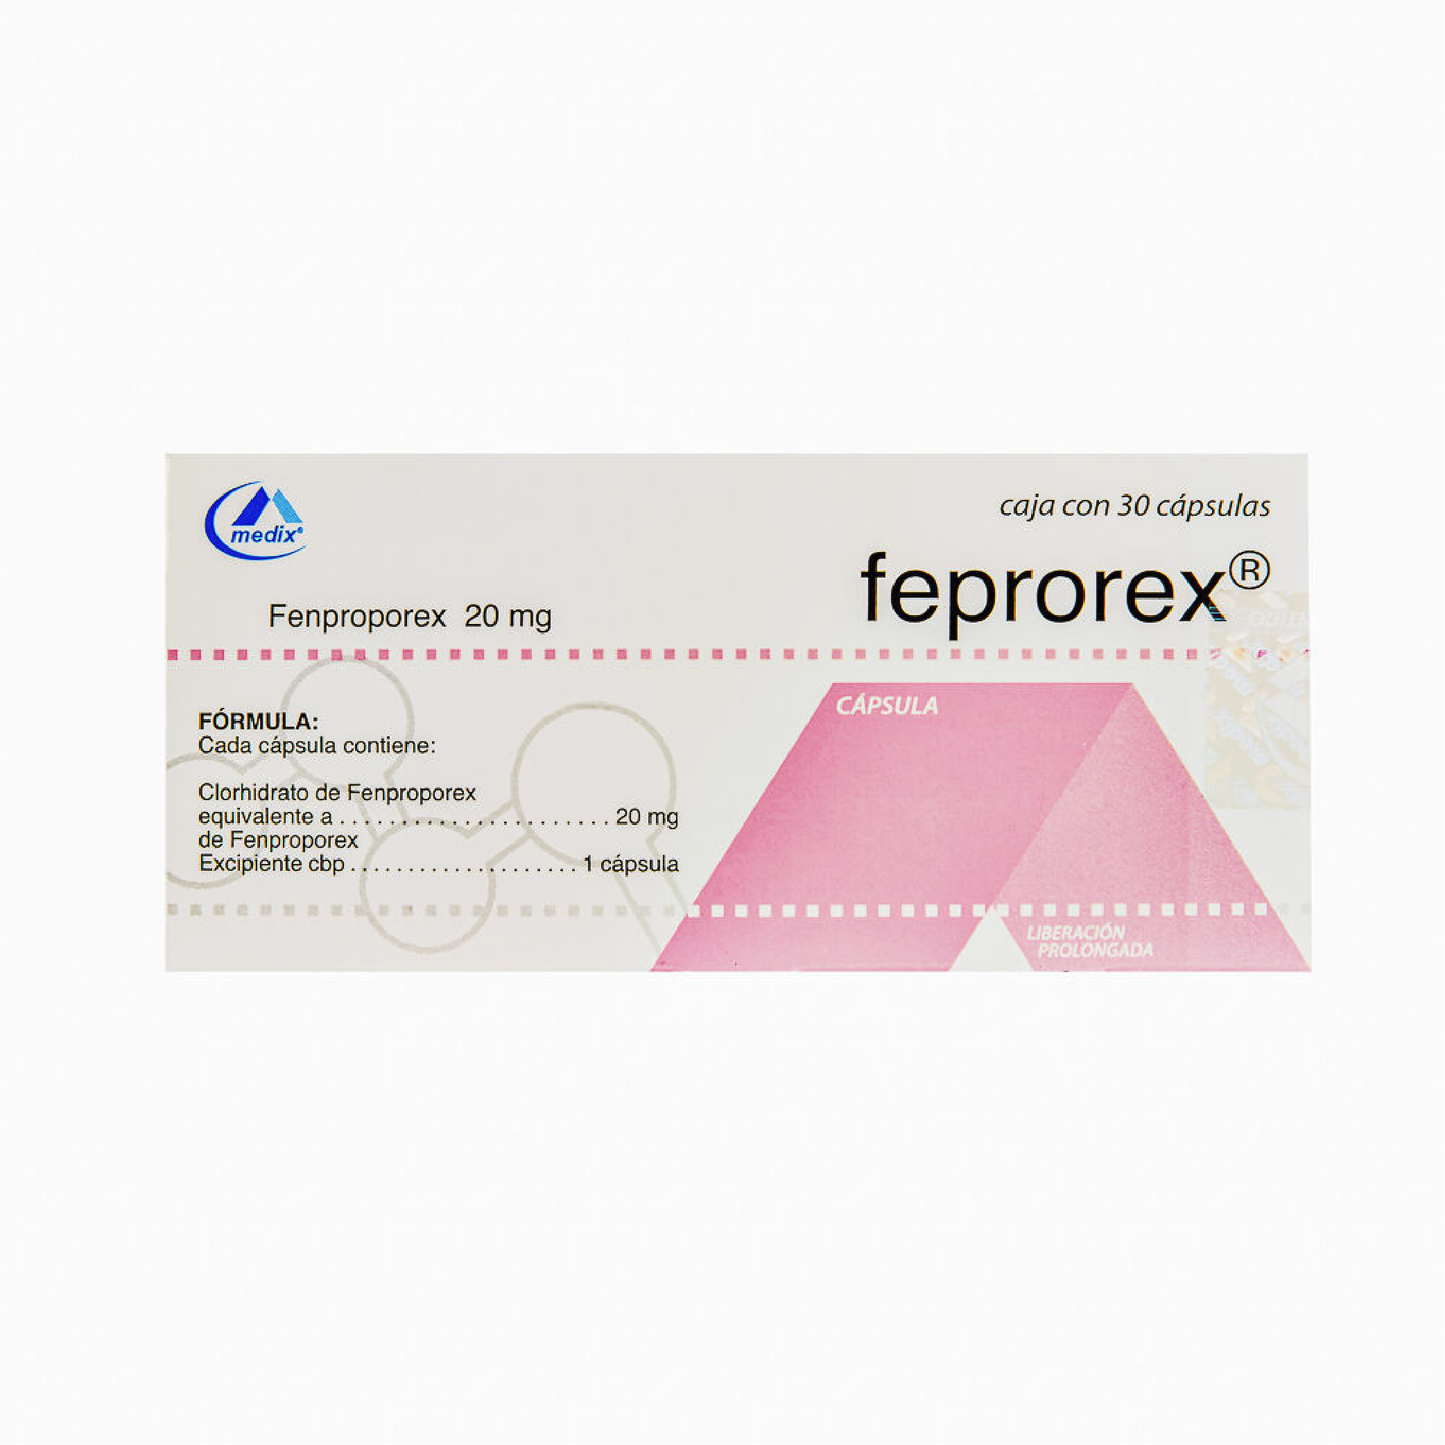 Feprorex (Fenproporex) Caps 20mg Cja c/30 caps